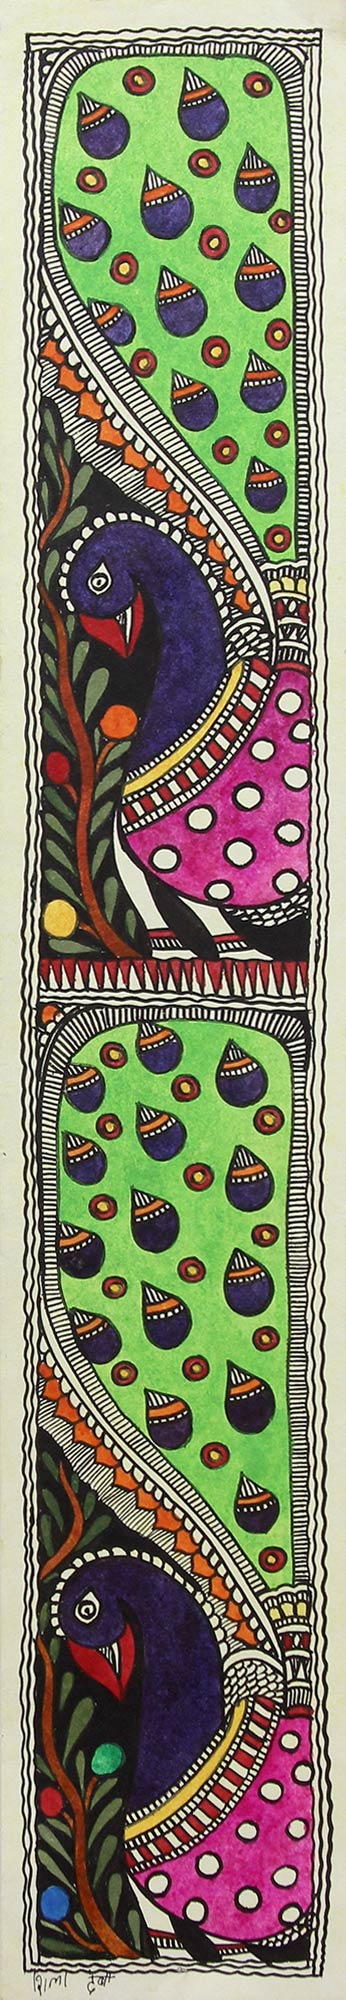 Traditional Peacocks Madhubani Painting on Handmade Paper